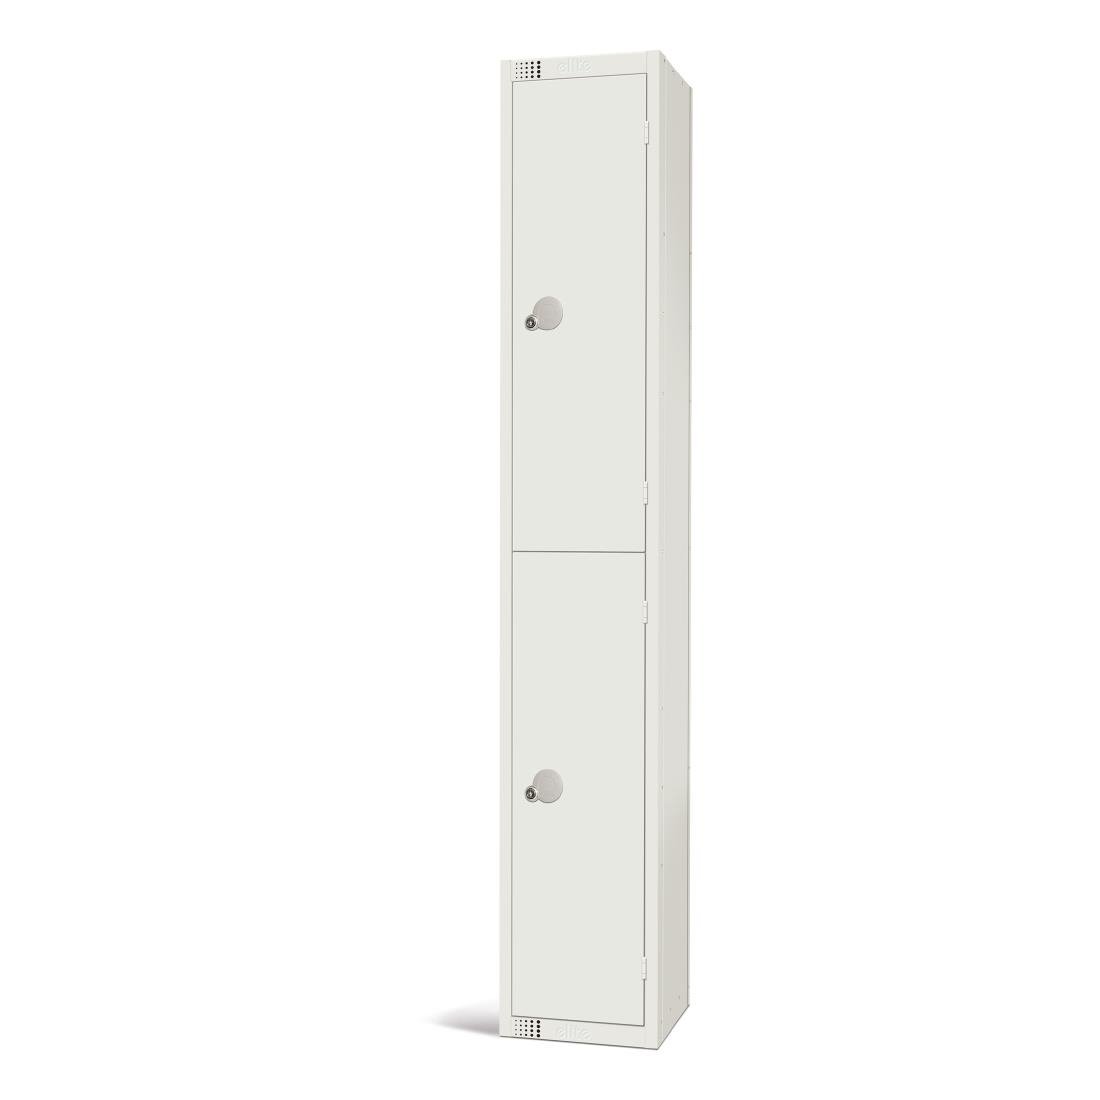 Elite Double Door Electronic Combination Locker with Sloping Top JD Catering Equipment Solutions Ltd